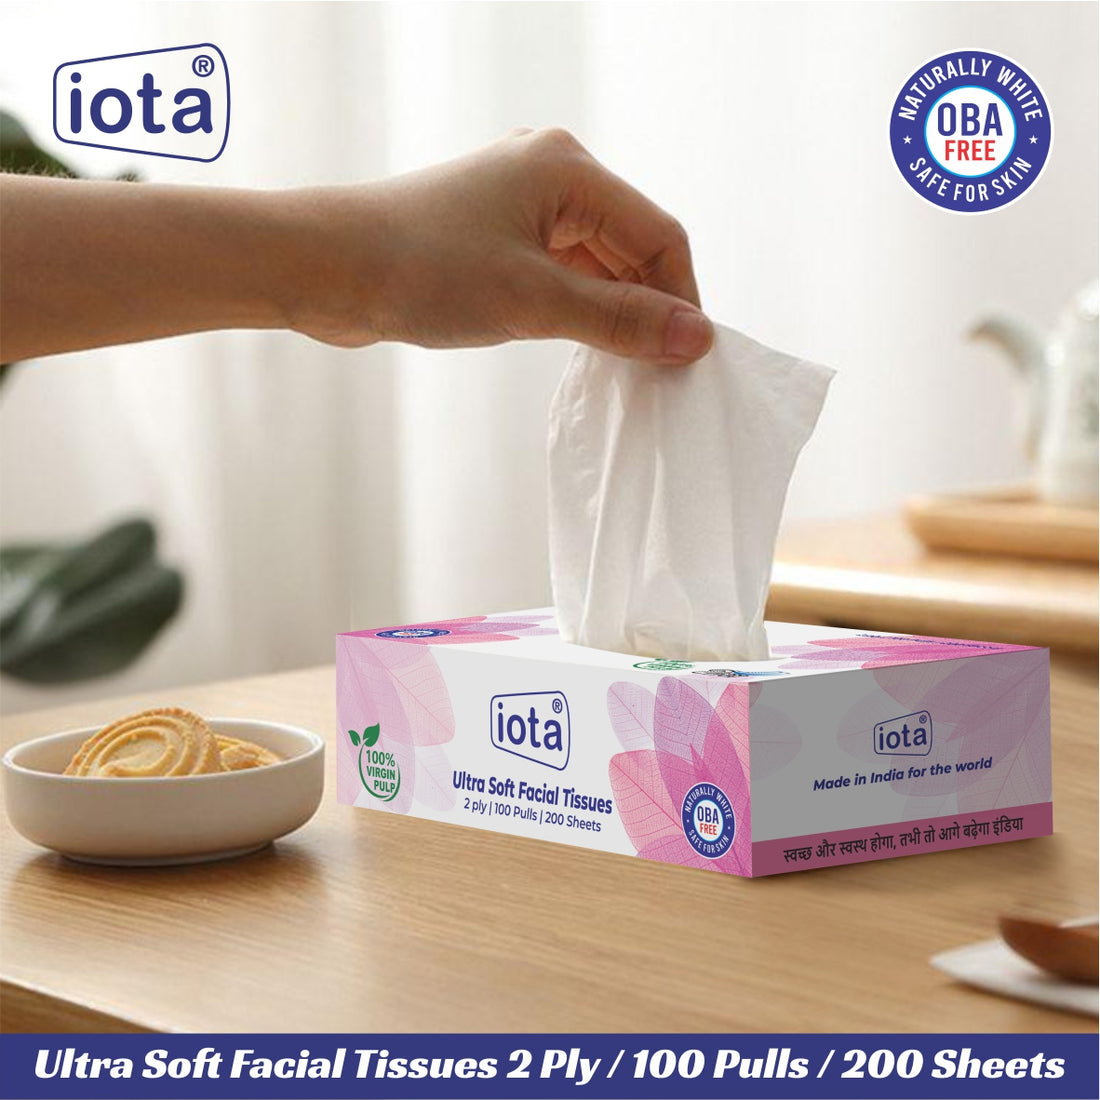 iota Facial Tissue Box With 2 Ply | 100 Pulls | 200 Sheets 100% Natural Skin-Friendly